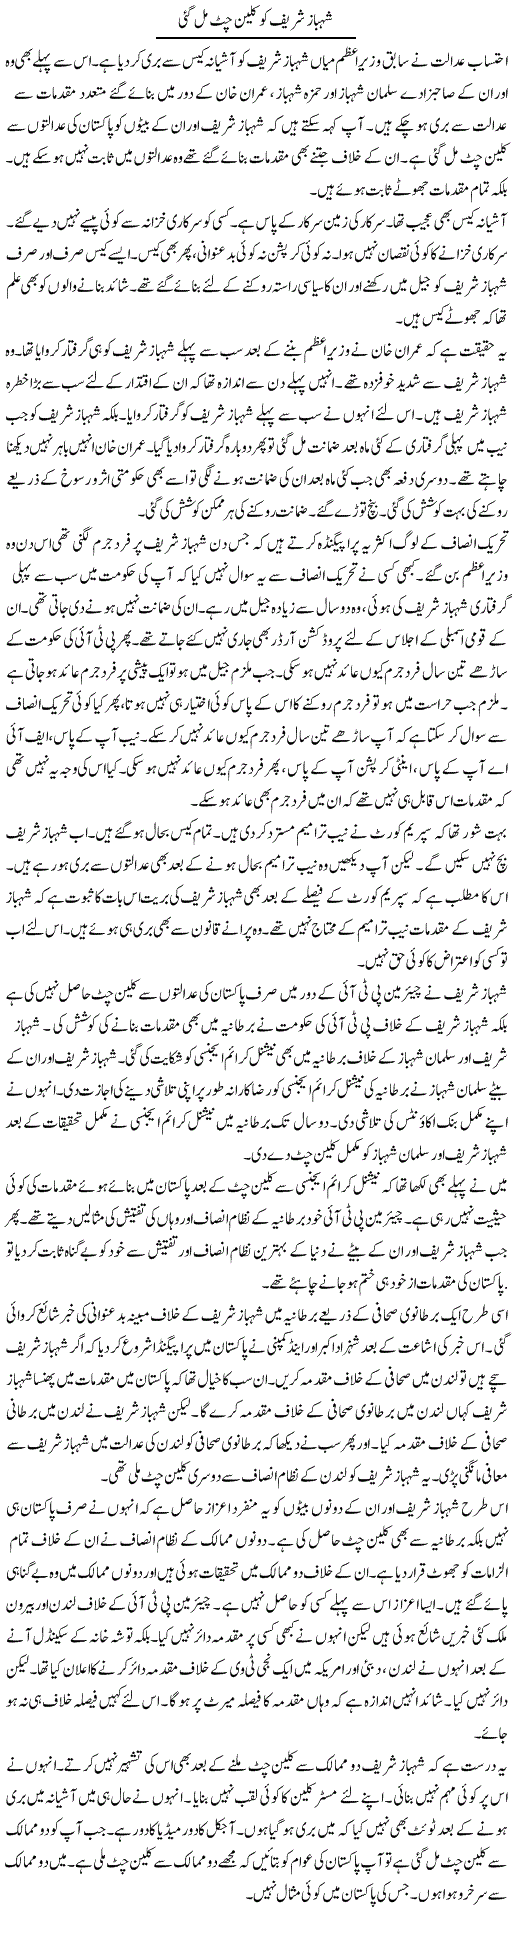 Muzammil Suherwardy Urdu Column About Corruption Cases Against PMLN Shahbaz Sharif